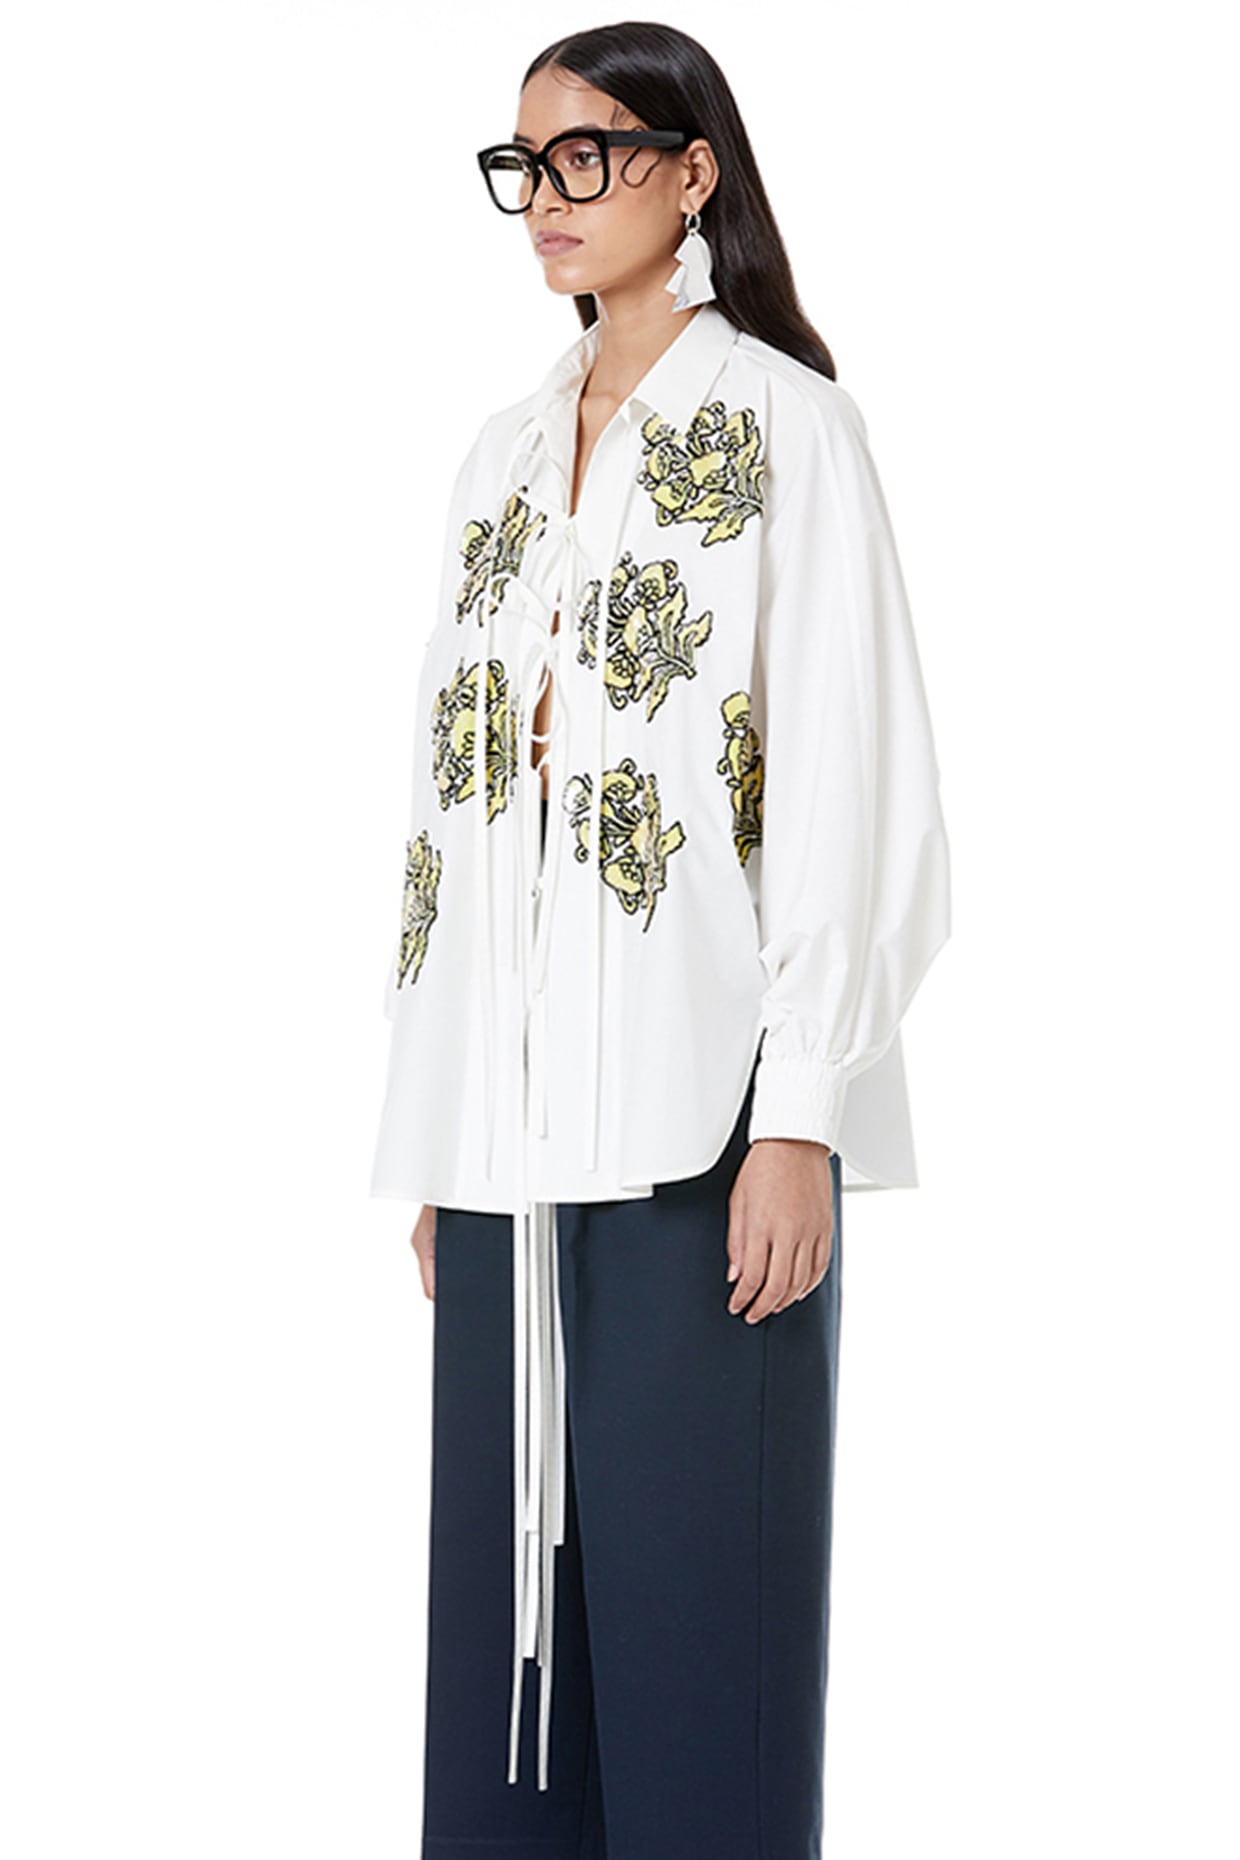 Dhruv Kapoor - Buy Dresses, Jackets, Shirts, Pants Online 2023